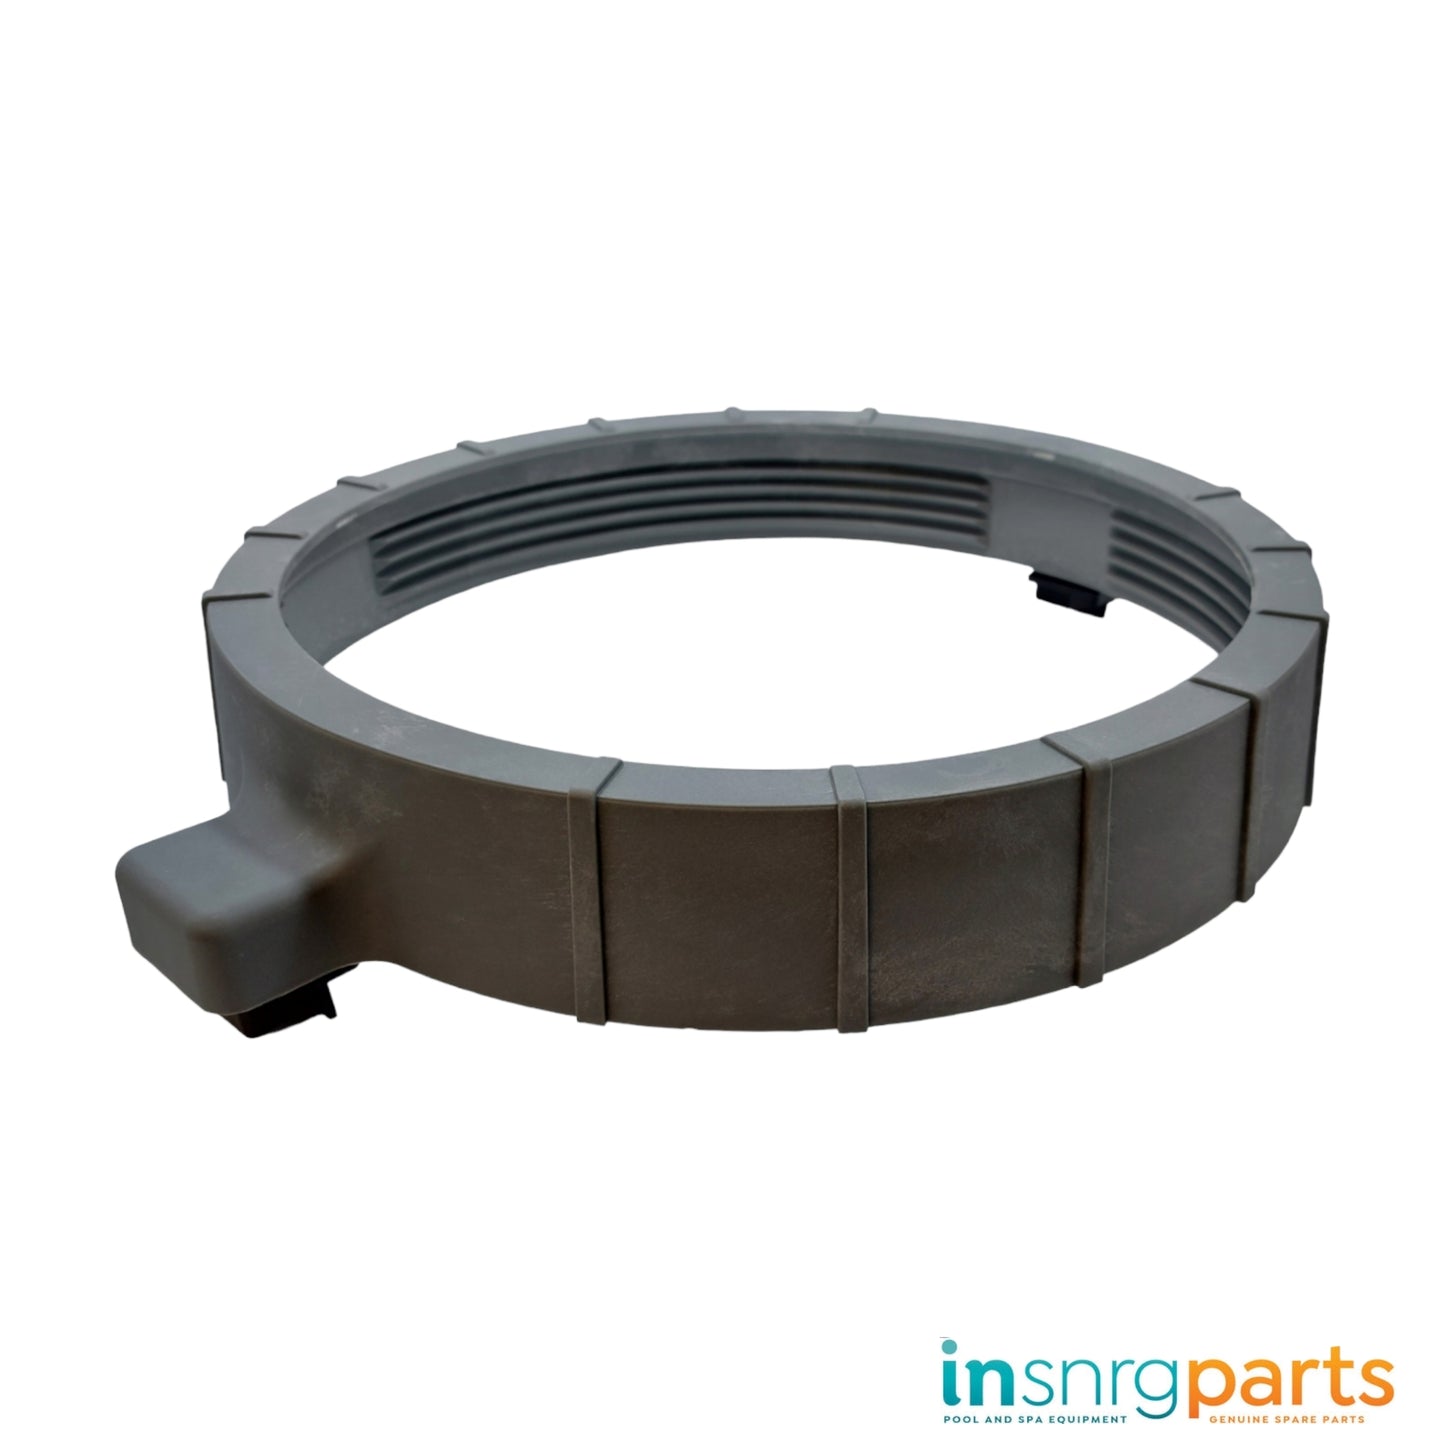 Cartridge Filter Lid Lock Ring - Insnrg Ci (Ci100/Ci150/Ci200/Ci250) Cartridge Filters [16120401004]